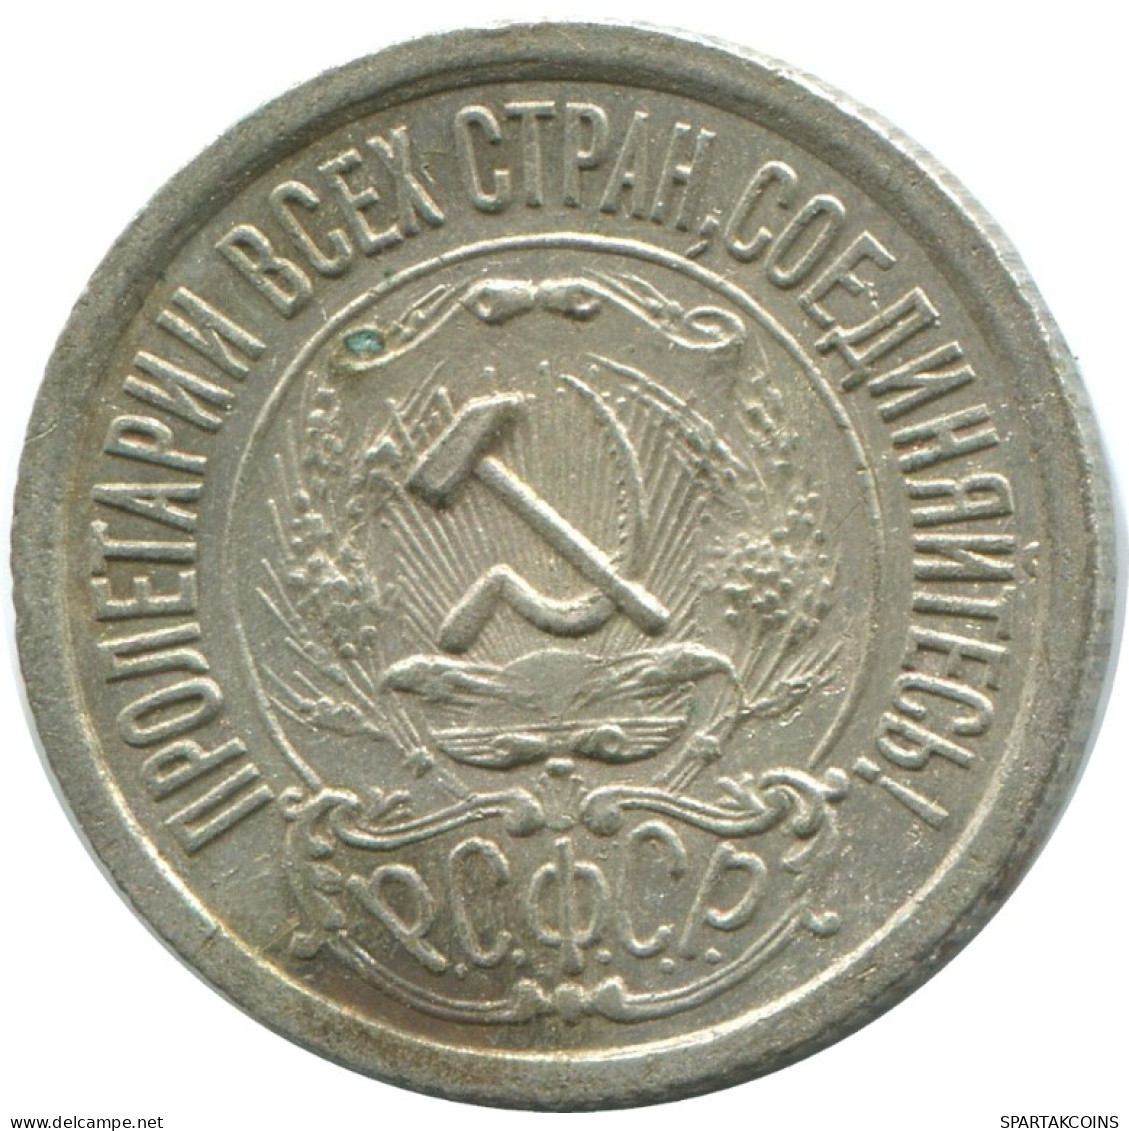 15 KOPEKS 1922 RUSSIA RSFSR SILVER Coin HIGH GRADE #AF175.4.U.A - Russie